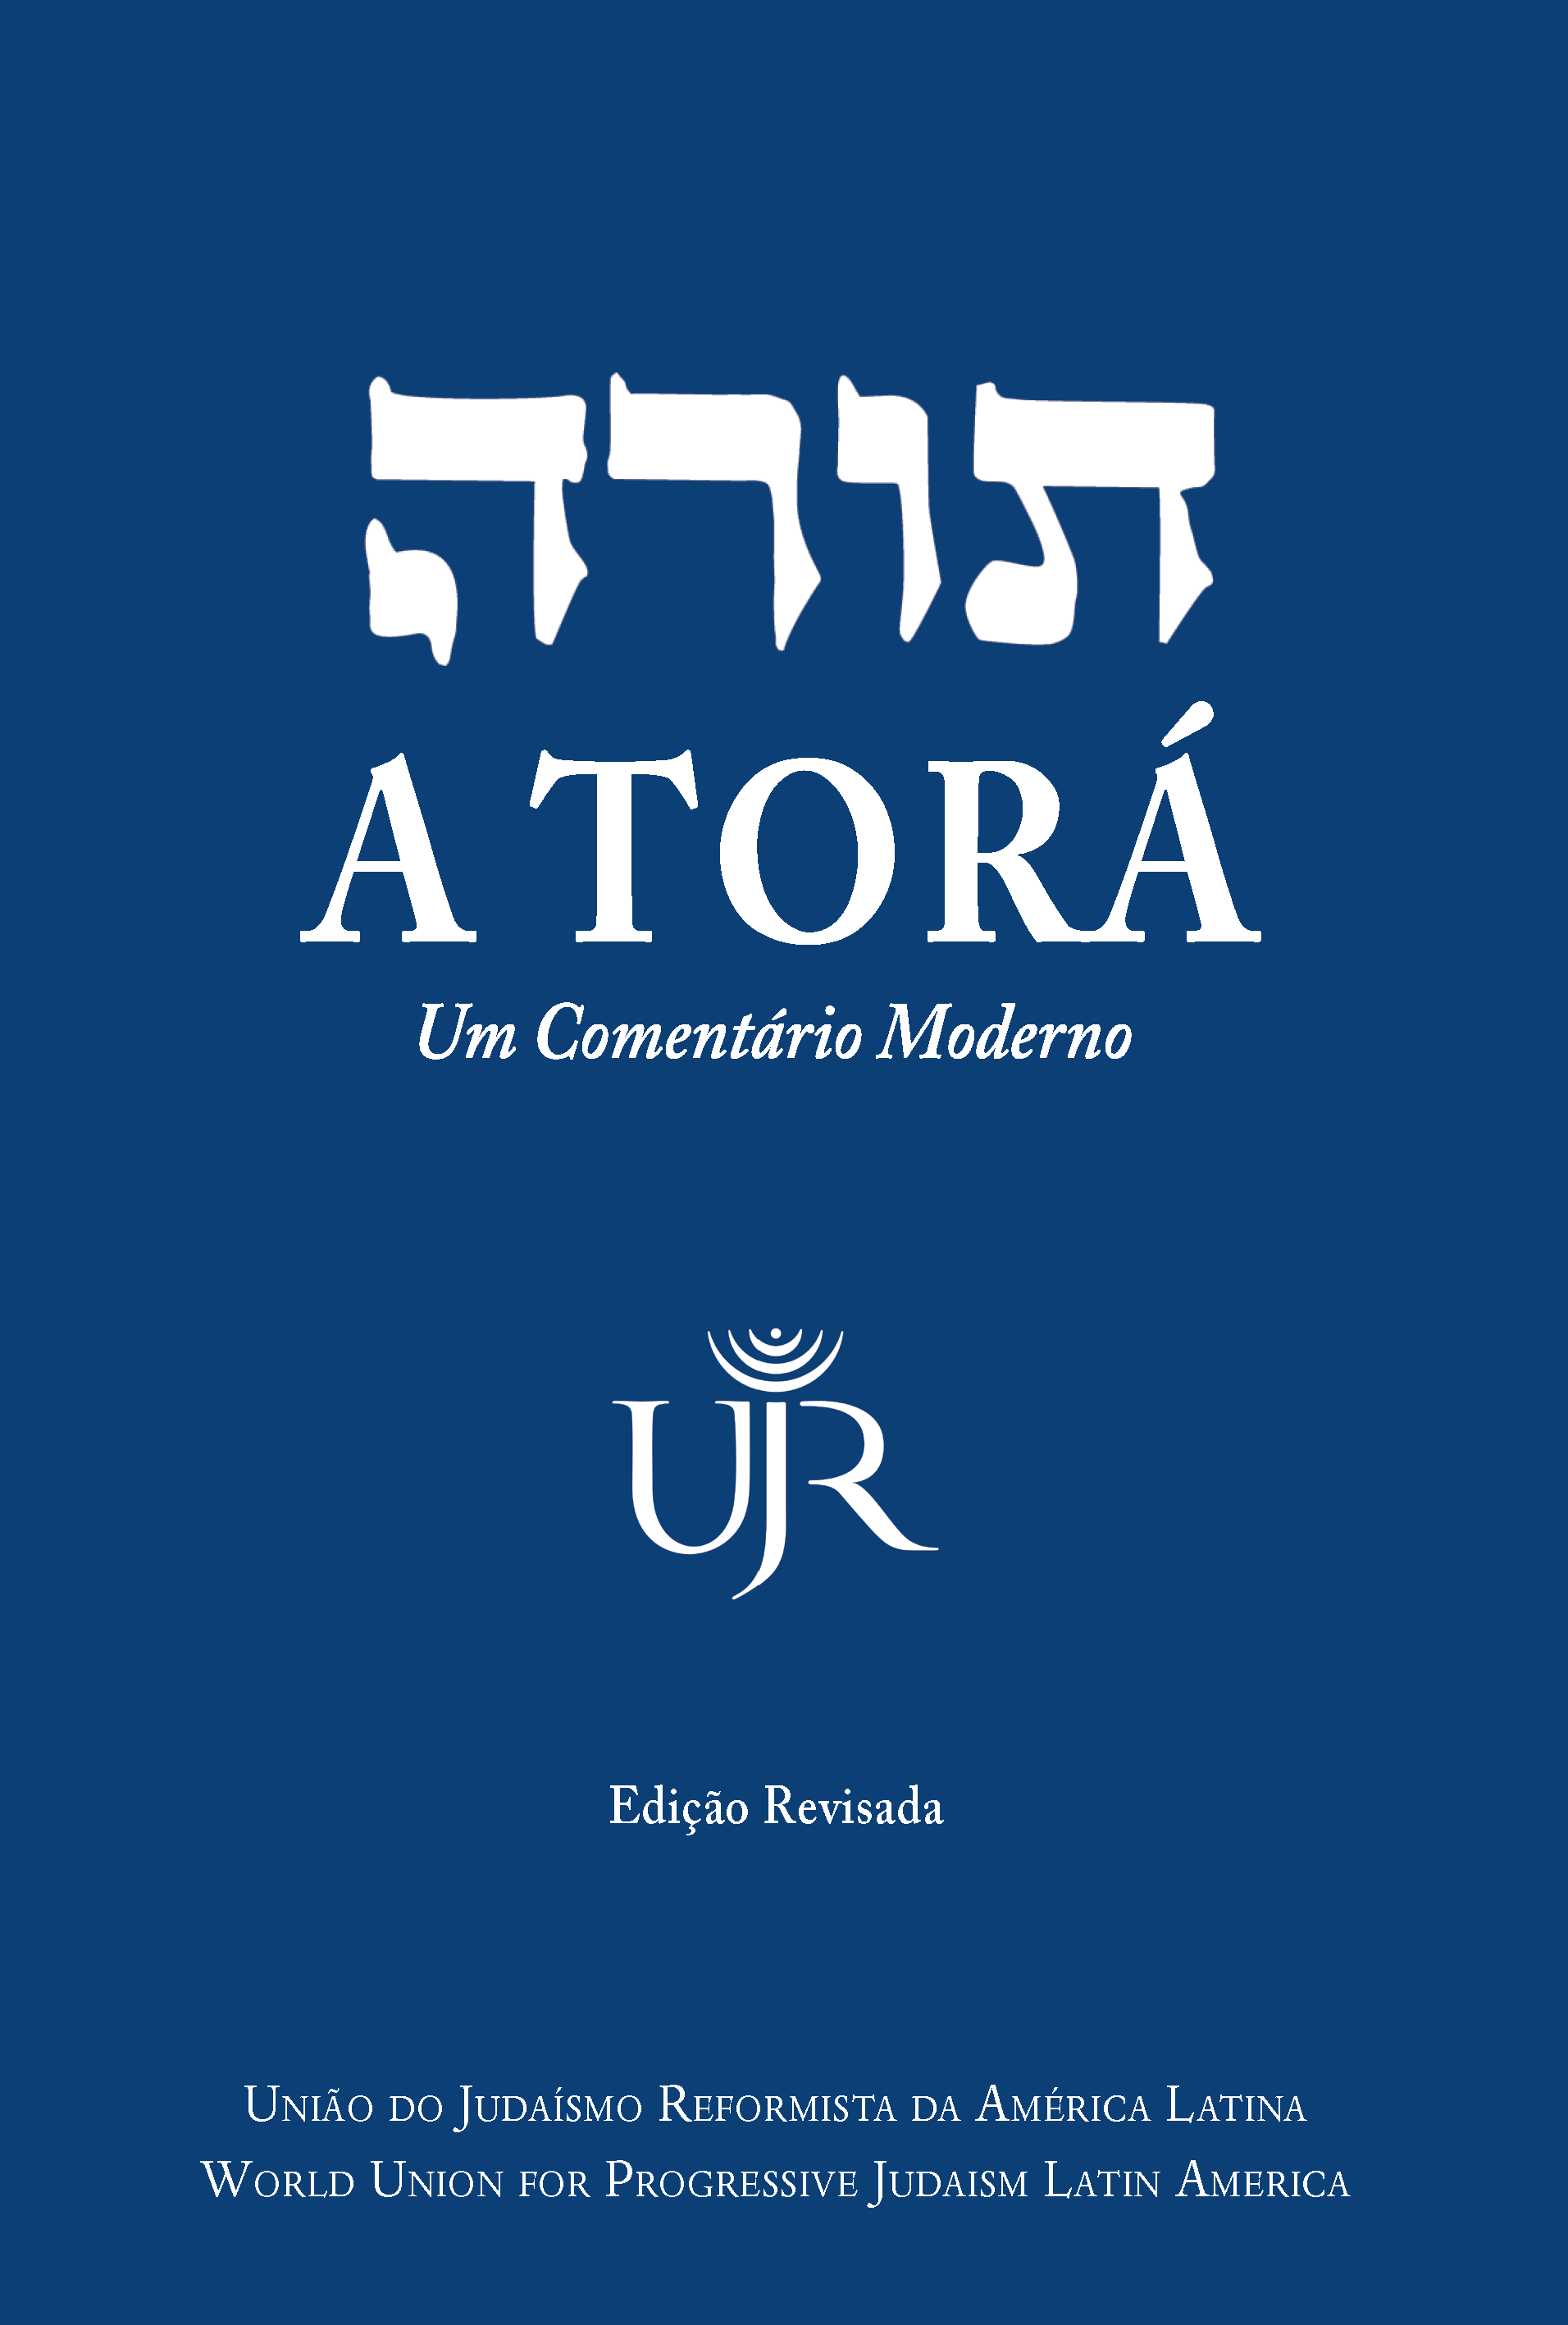 Torah, Revised Edition, PortugueseTranslation